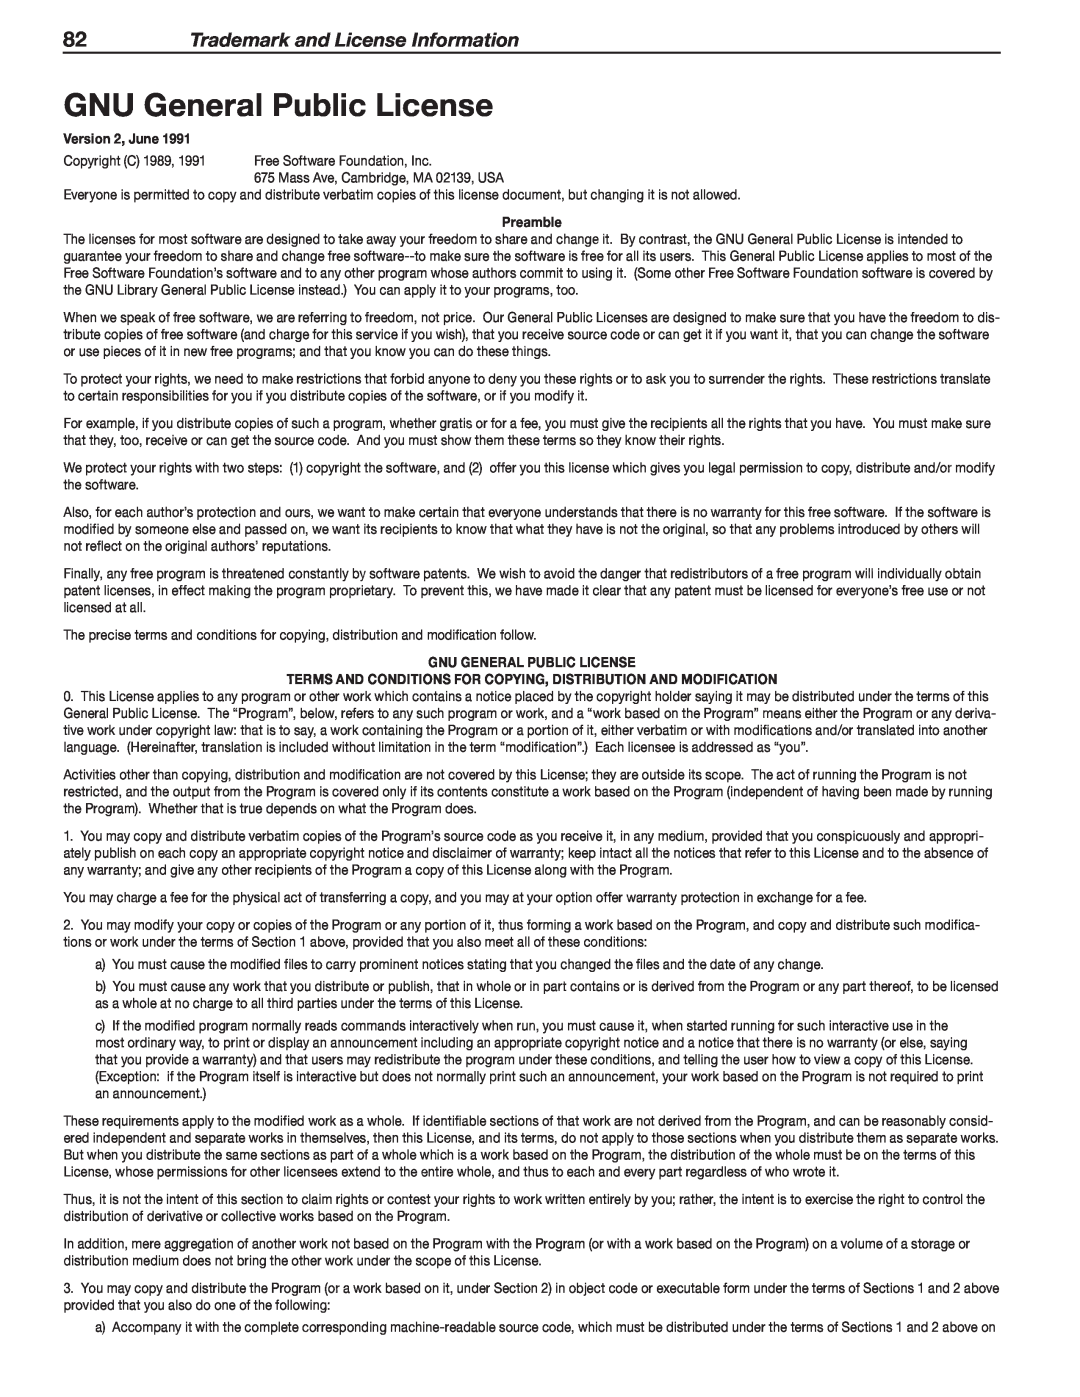 Mitsubishi Electronics 737, 837, C9 manual GNU General Public License, 82Trademark and License Information 